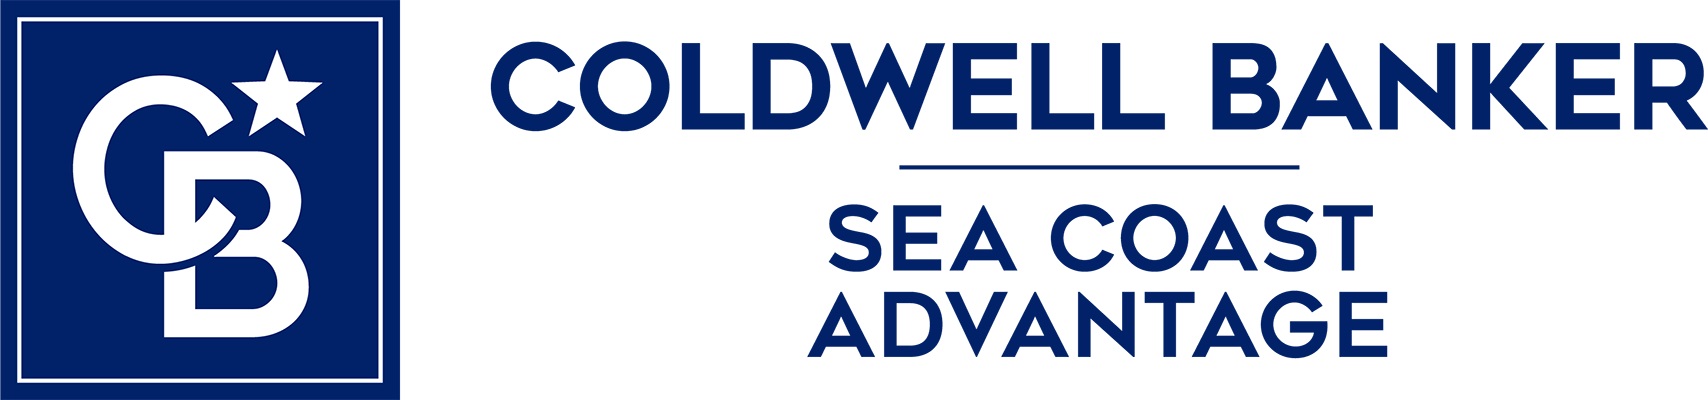 Coldwell Banker Sea Coast Advantage - Barbara Pugh Logo